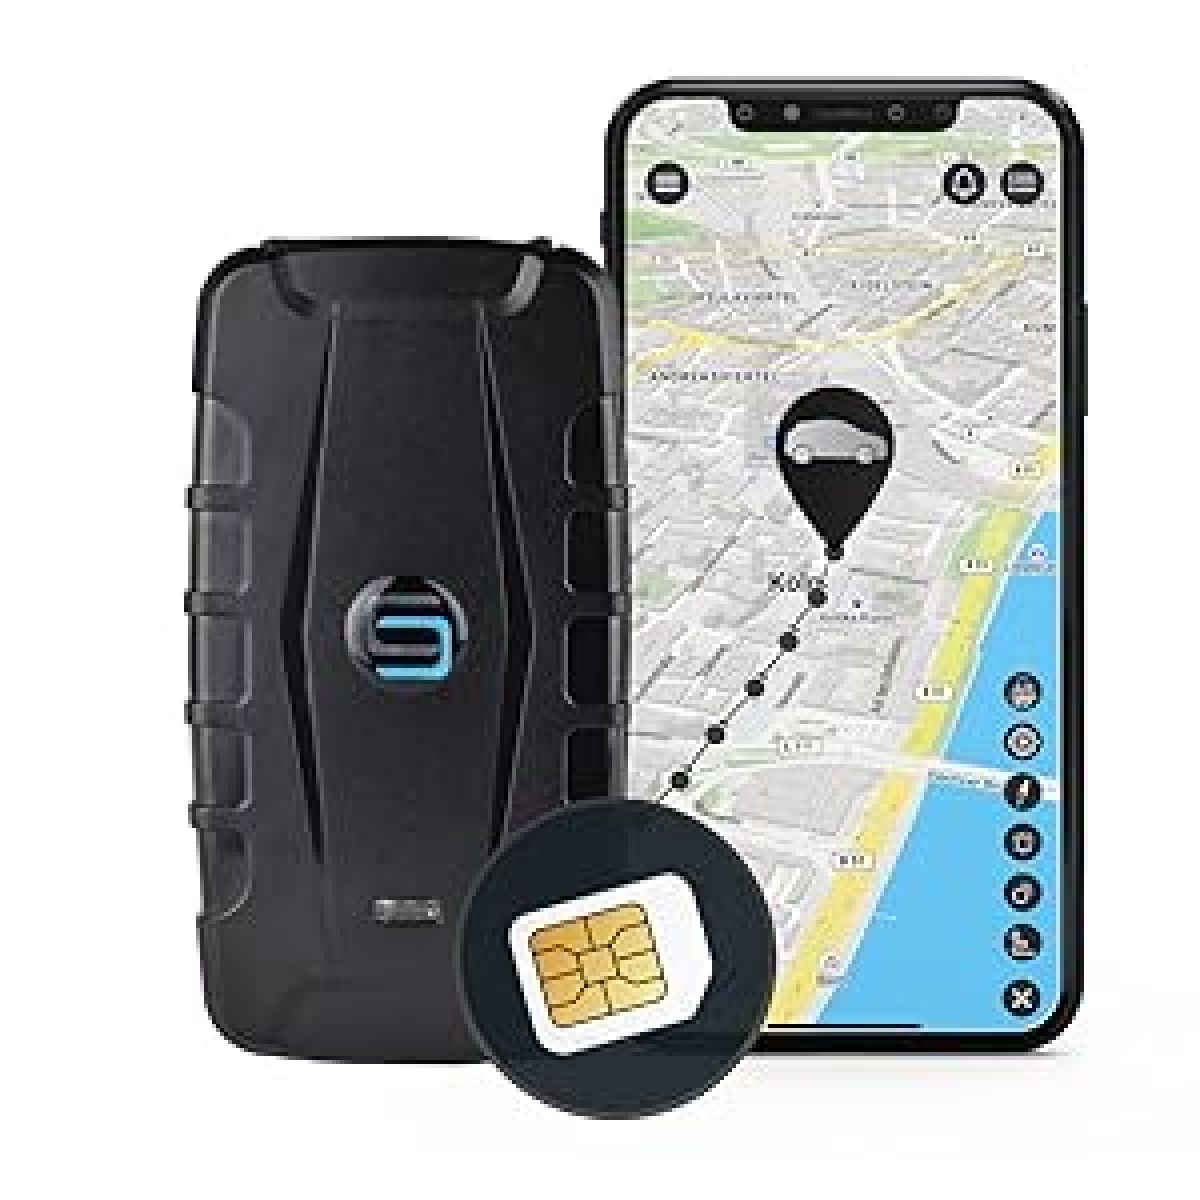 GPS-трекер Salind 20 4G для автомобилей, техники и лодок